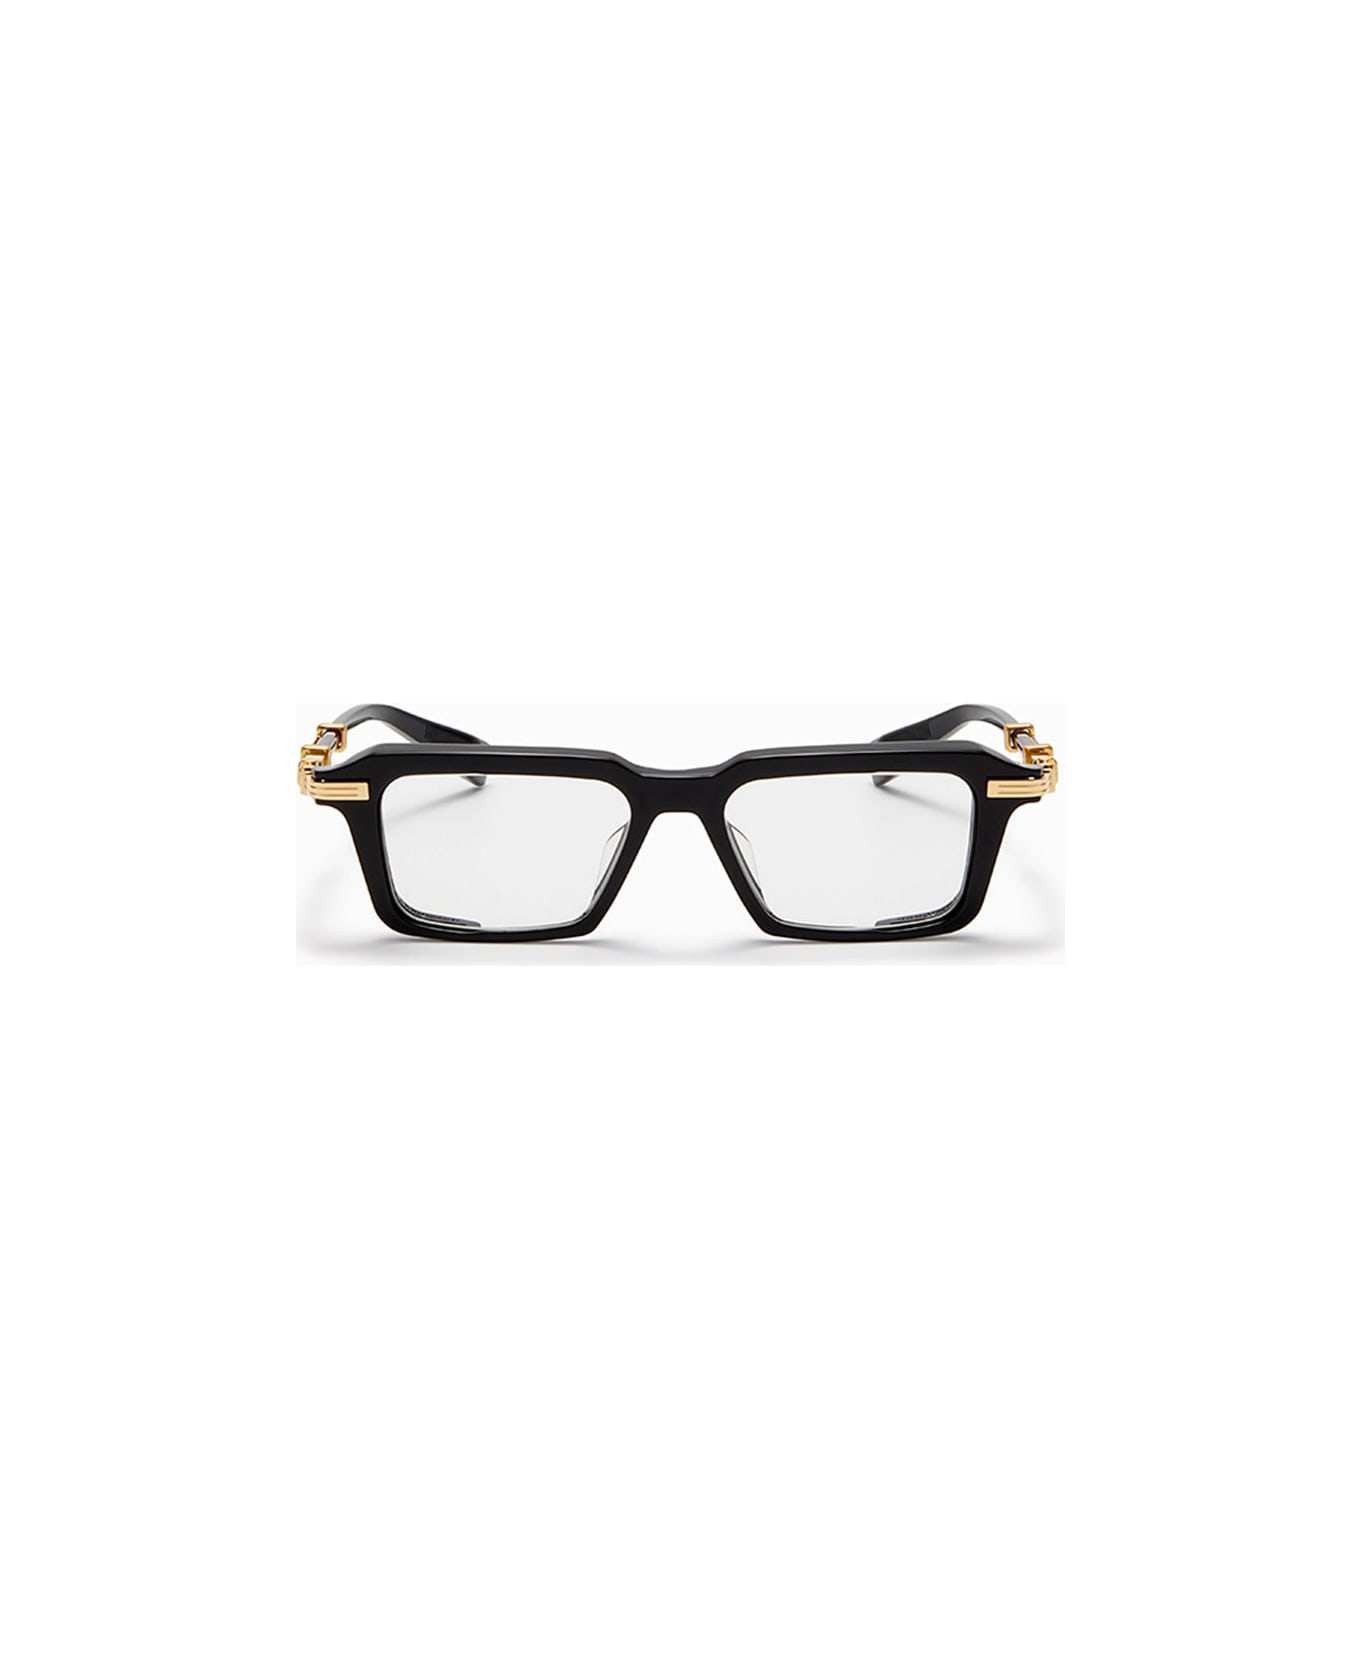 Balmain Legion Iii - Black / Gold Eyeglasses Glasses - gold, black